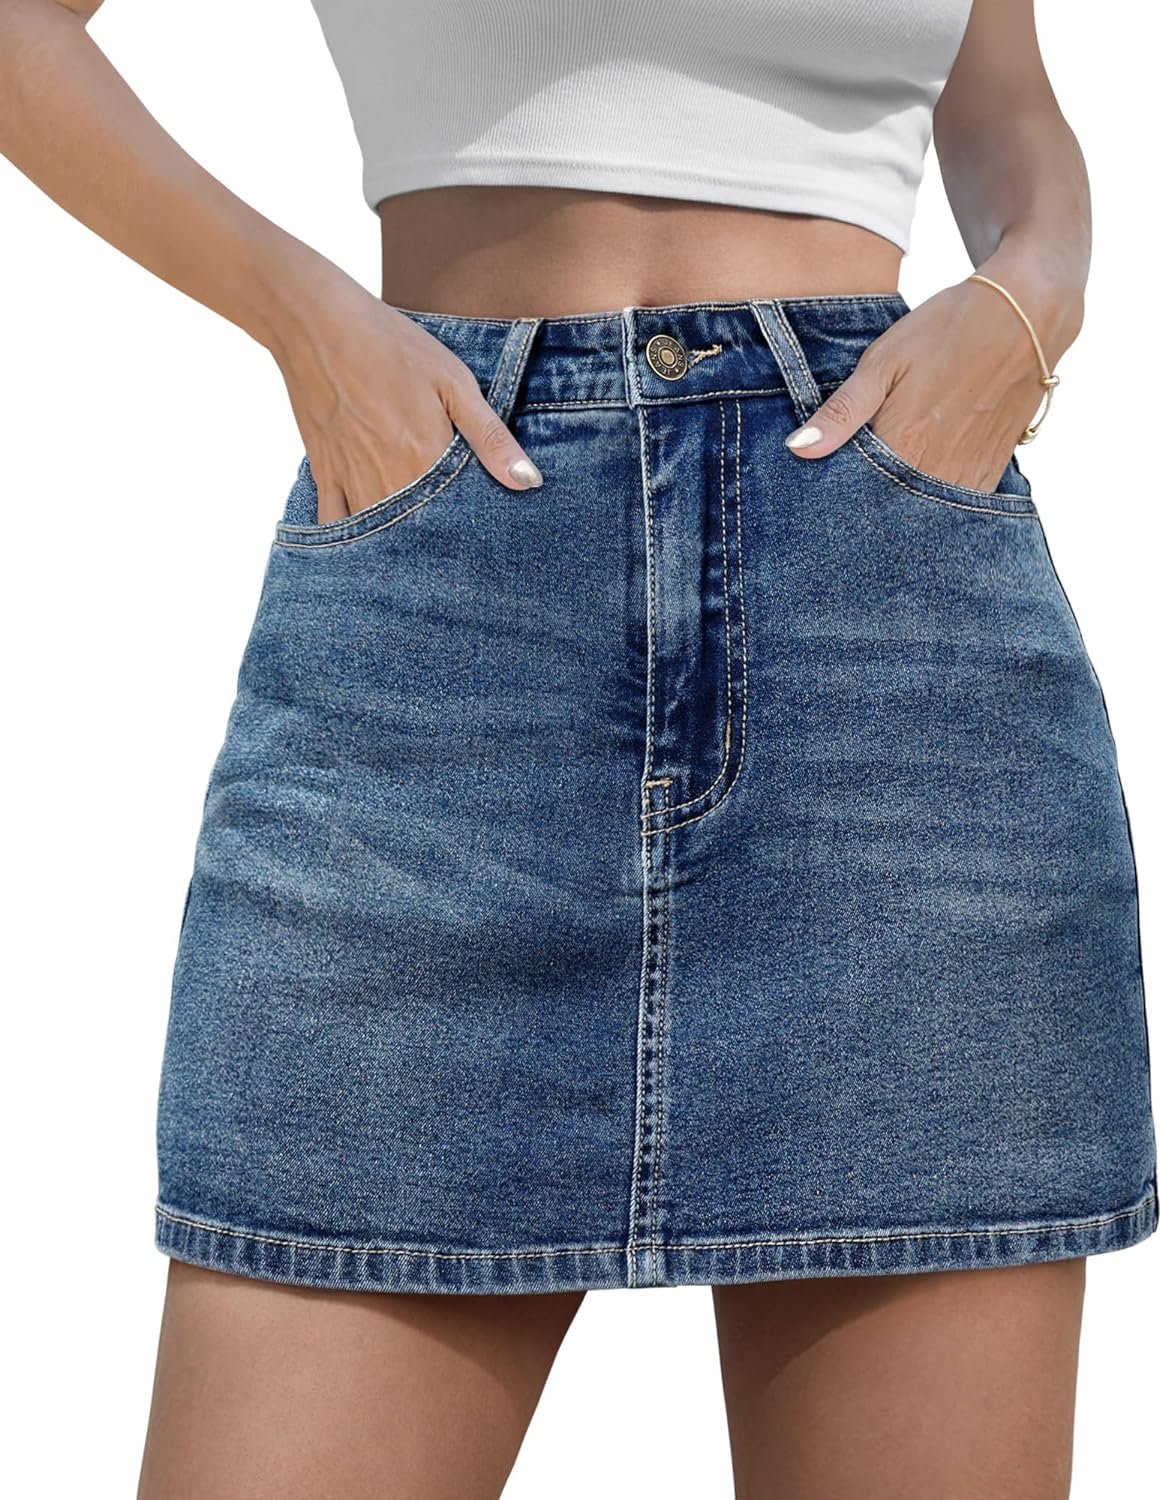 Womens Denim Mini Skort High Waisted Stretch Casual Jean Skirt Shorts 5 Pockets